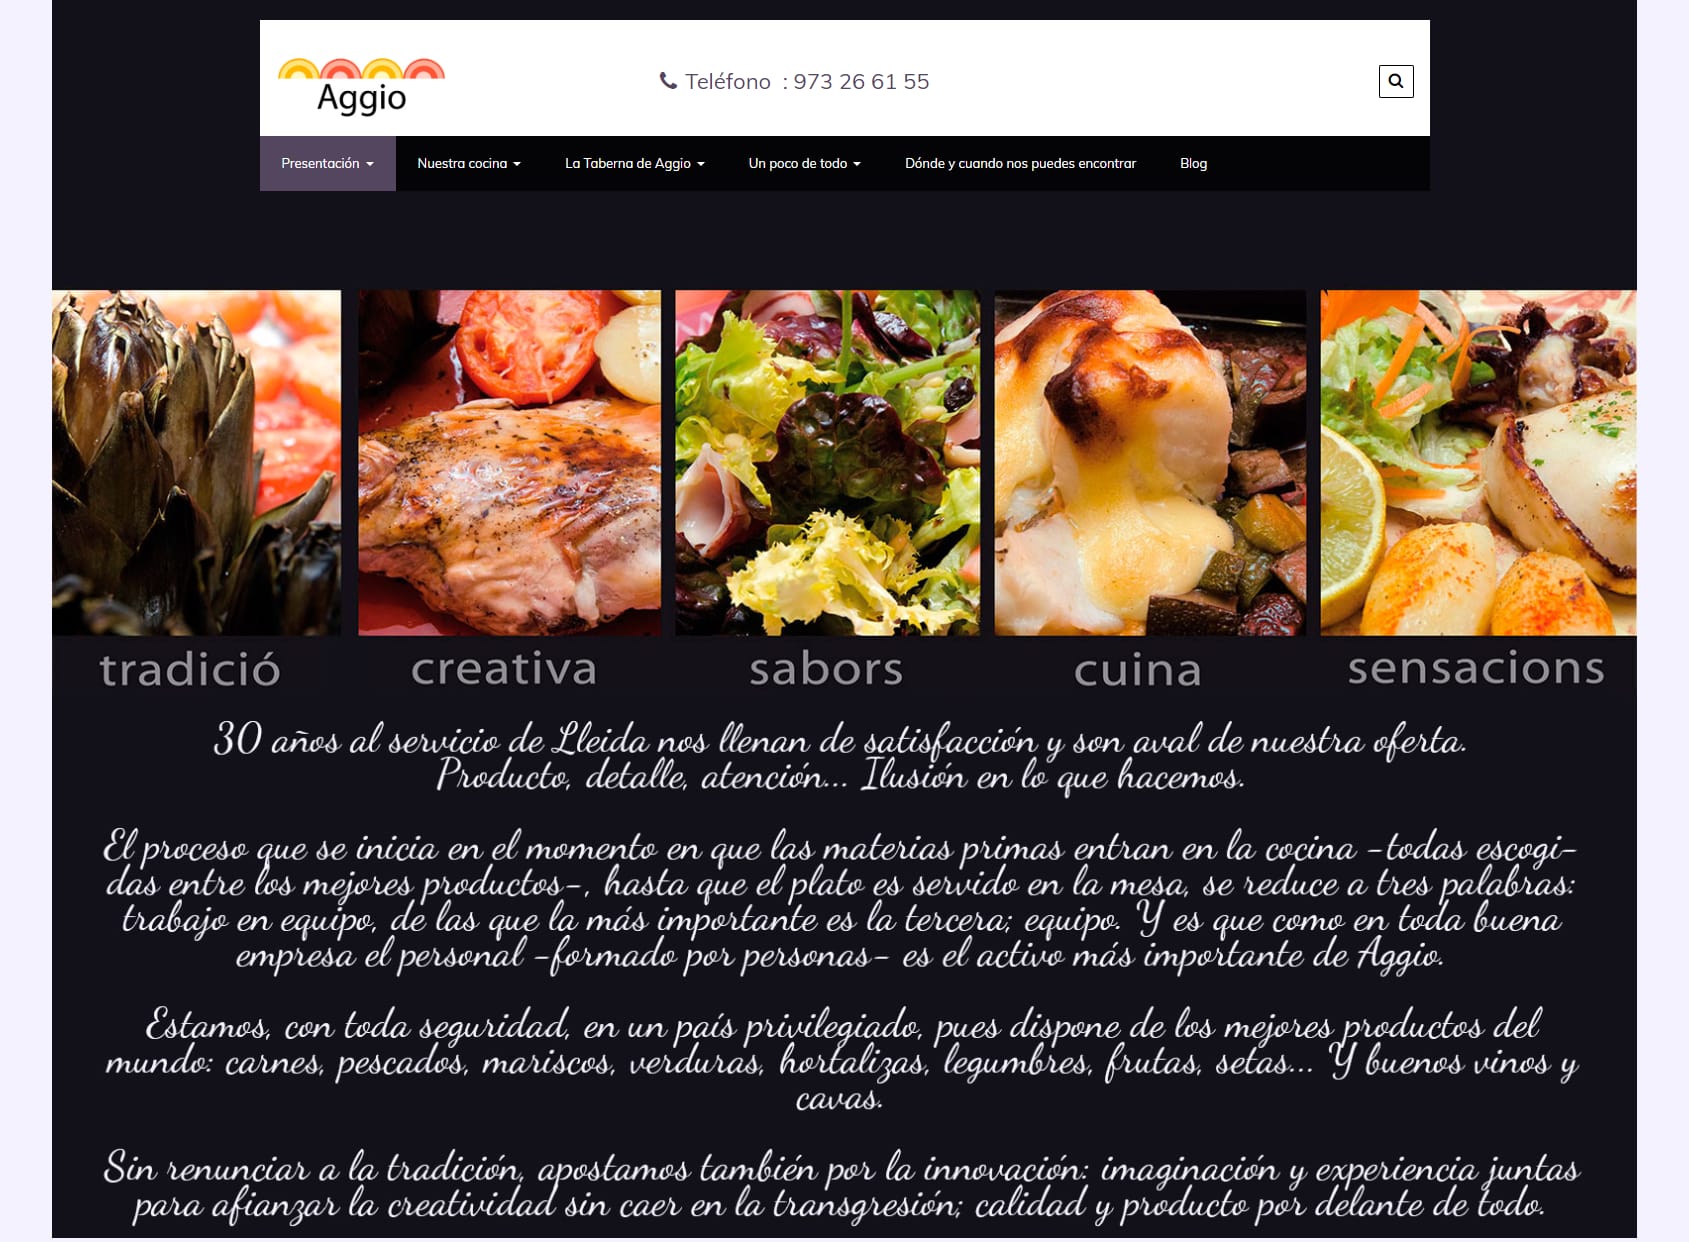 Aggio | Restaurant Braseria